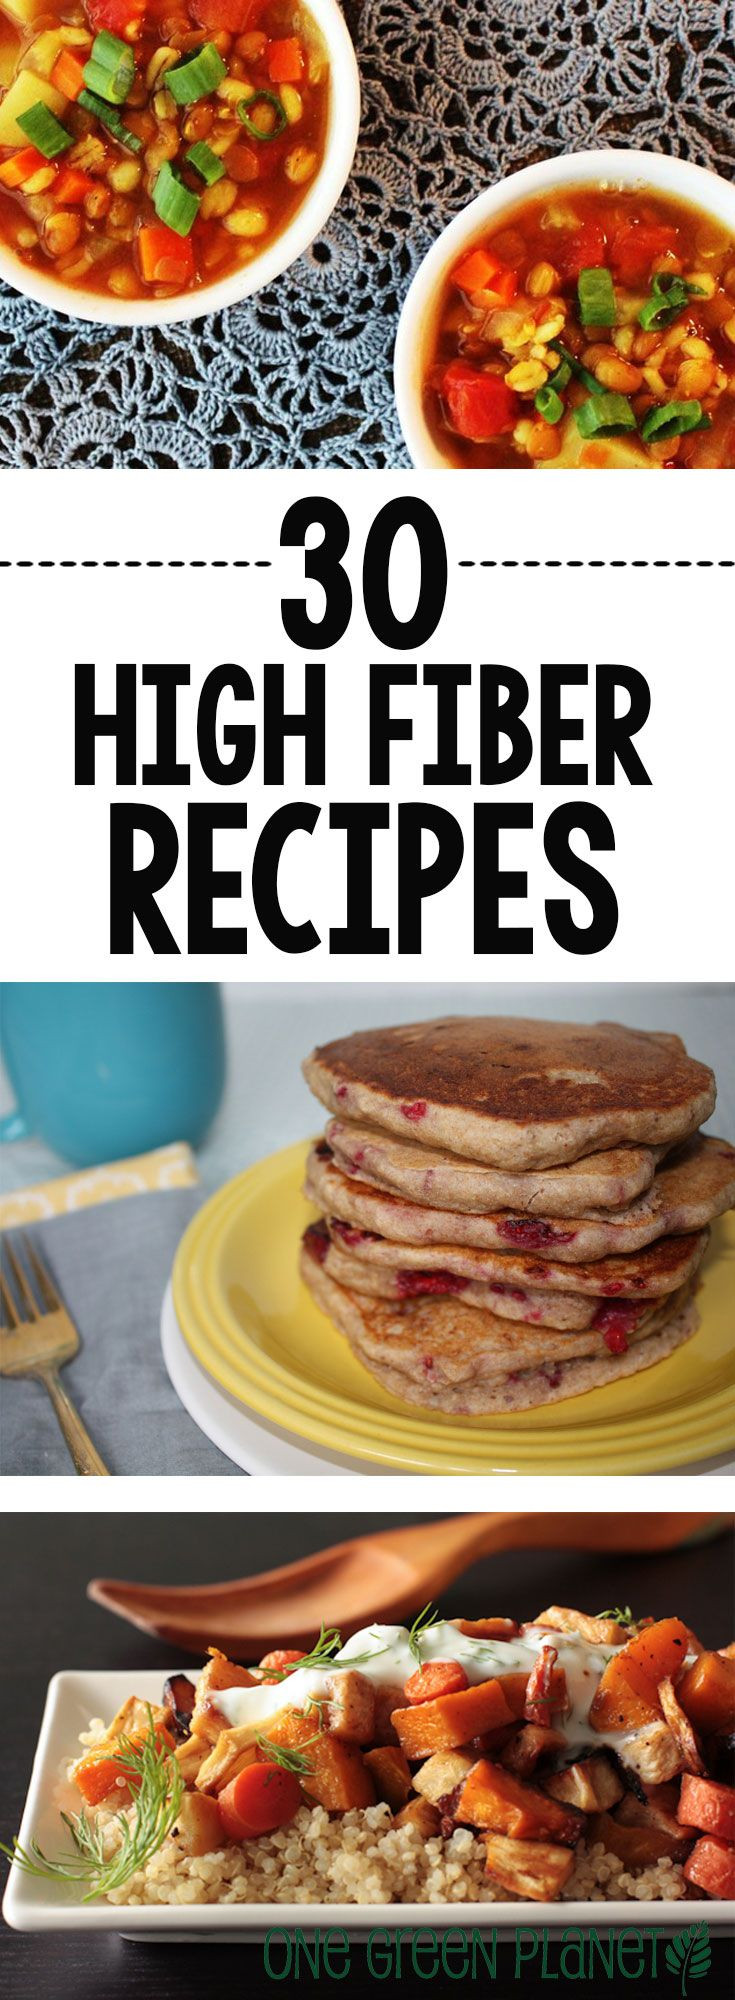 High Fiber Recipes For Dinner
 100 Diverticulitis Recipes on Pinterest